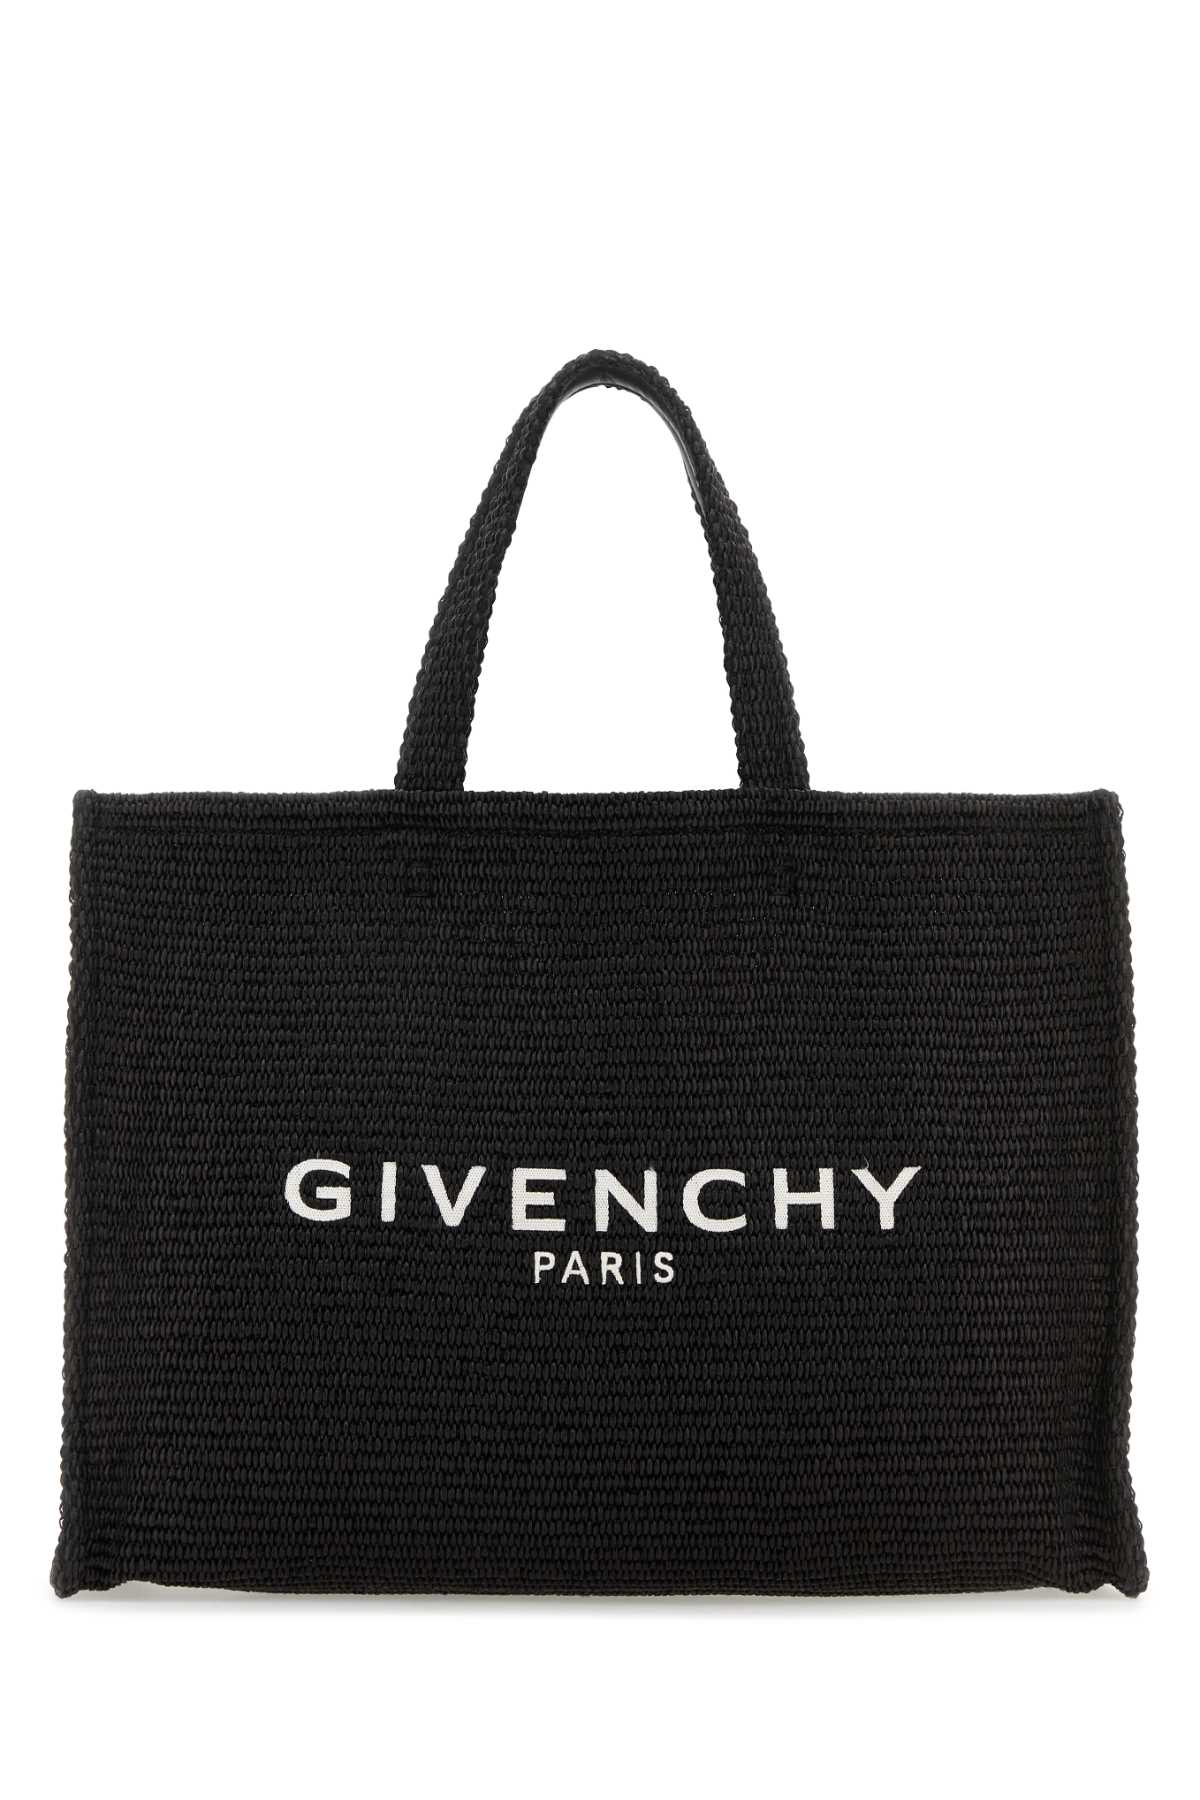 Givenchy Black Raffia Medium G-tote Shopping Bag